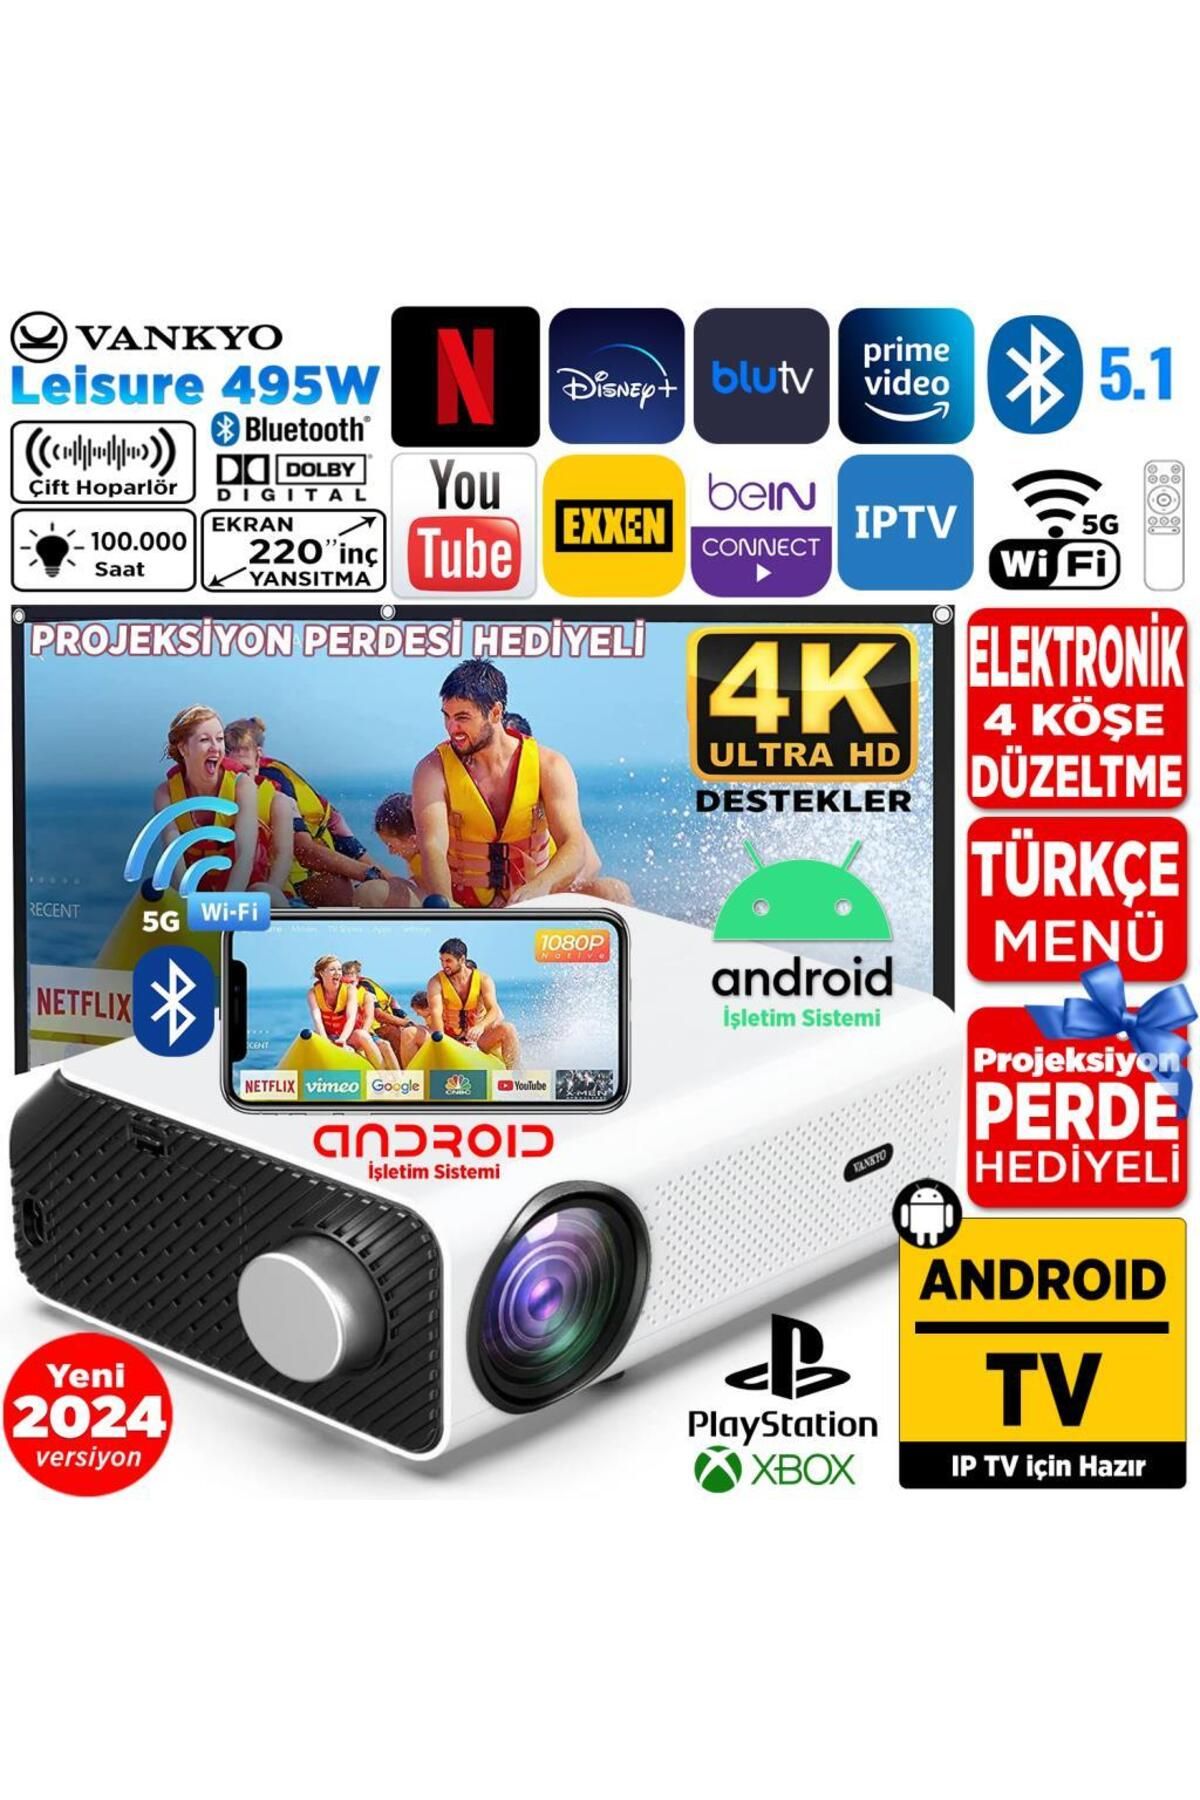 Vankyo Leisure 495W Android 4K Destekli 5g Wi-Fi + Bluetooth LCD LED Projeksiyon Cihazı